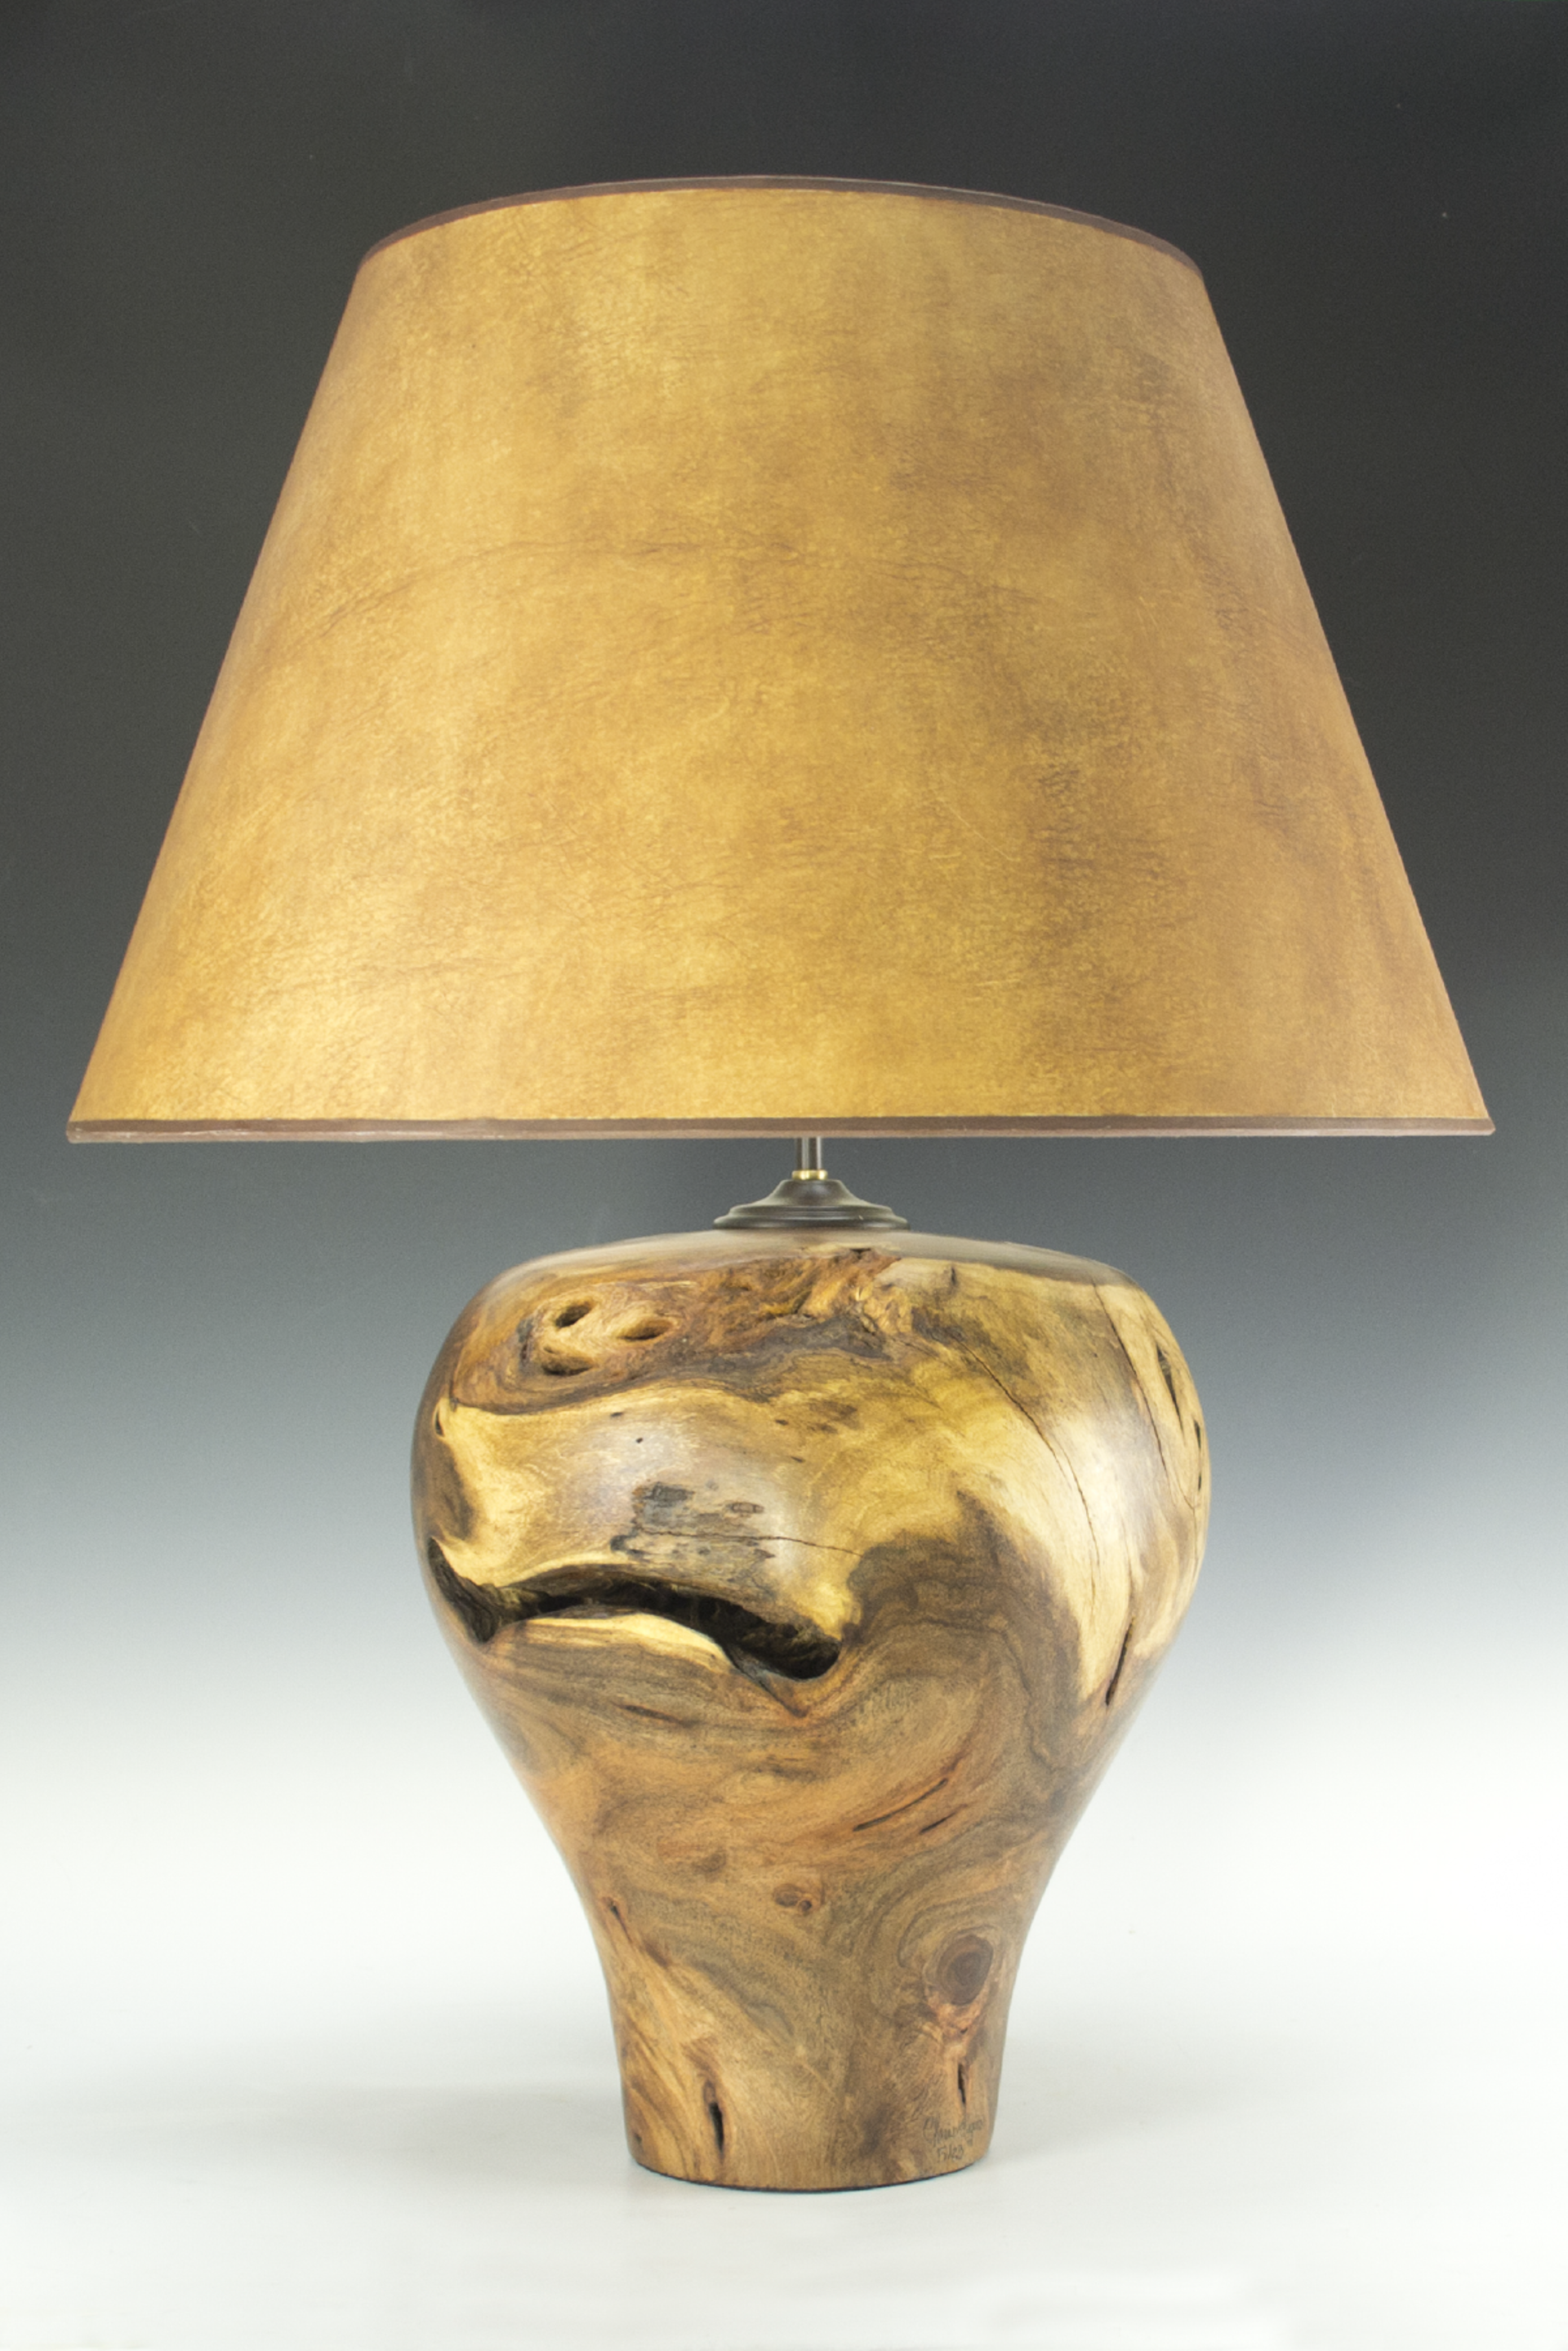 Medium Burl Mesquite Stump Lamp by Chris Eggers